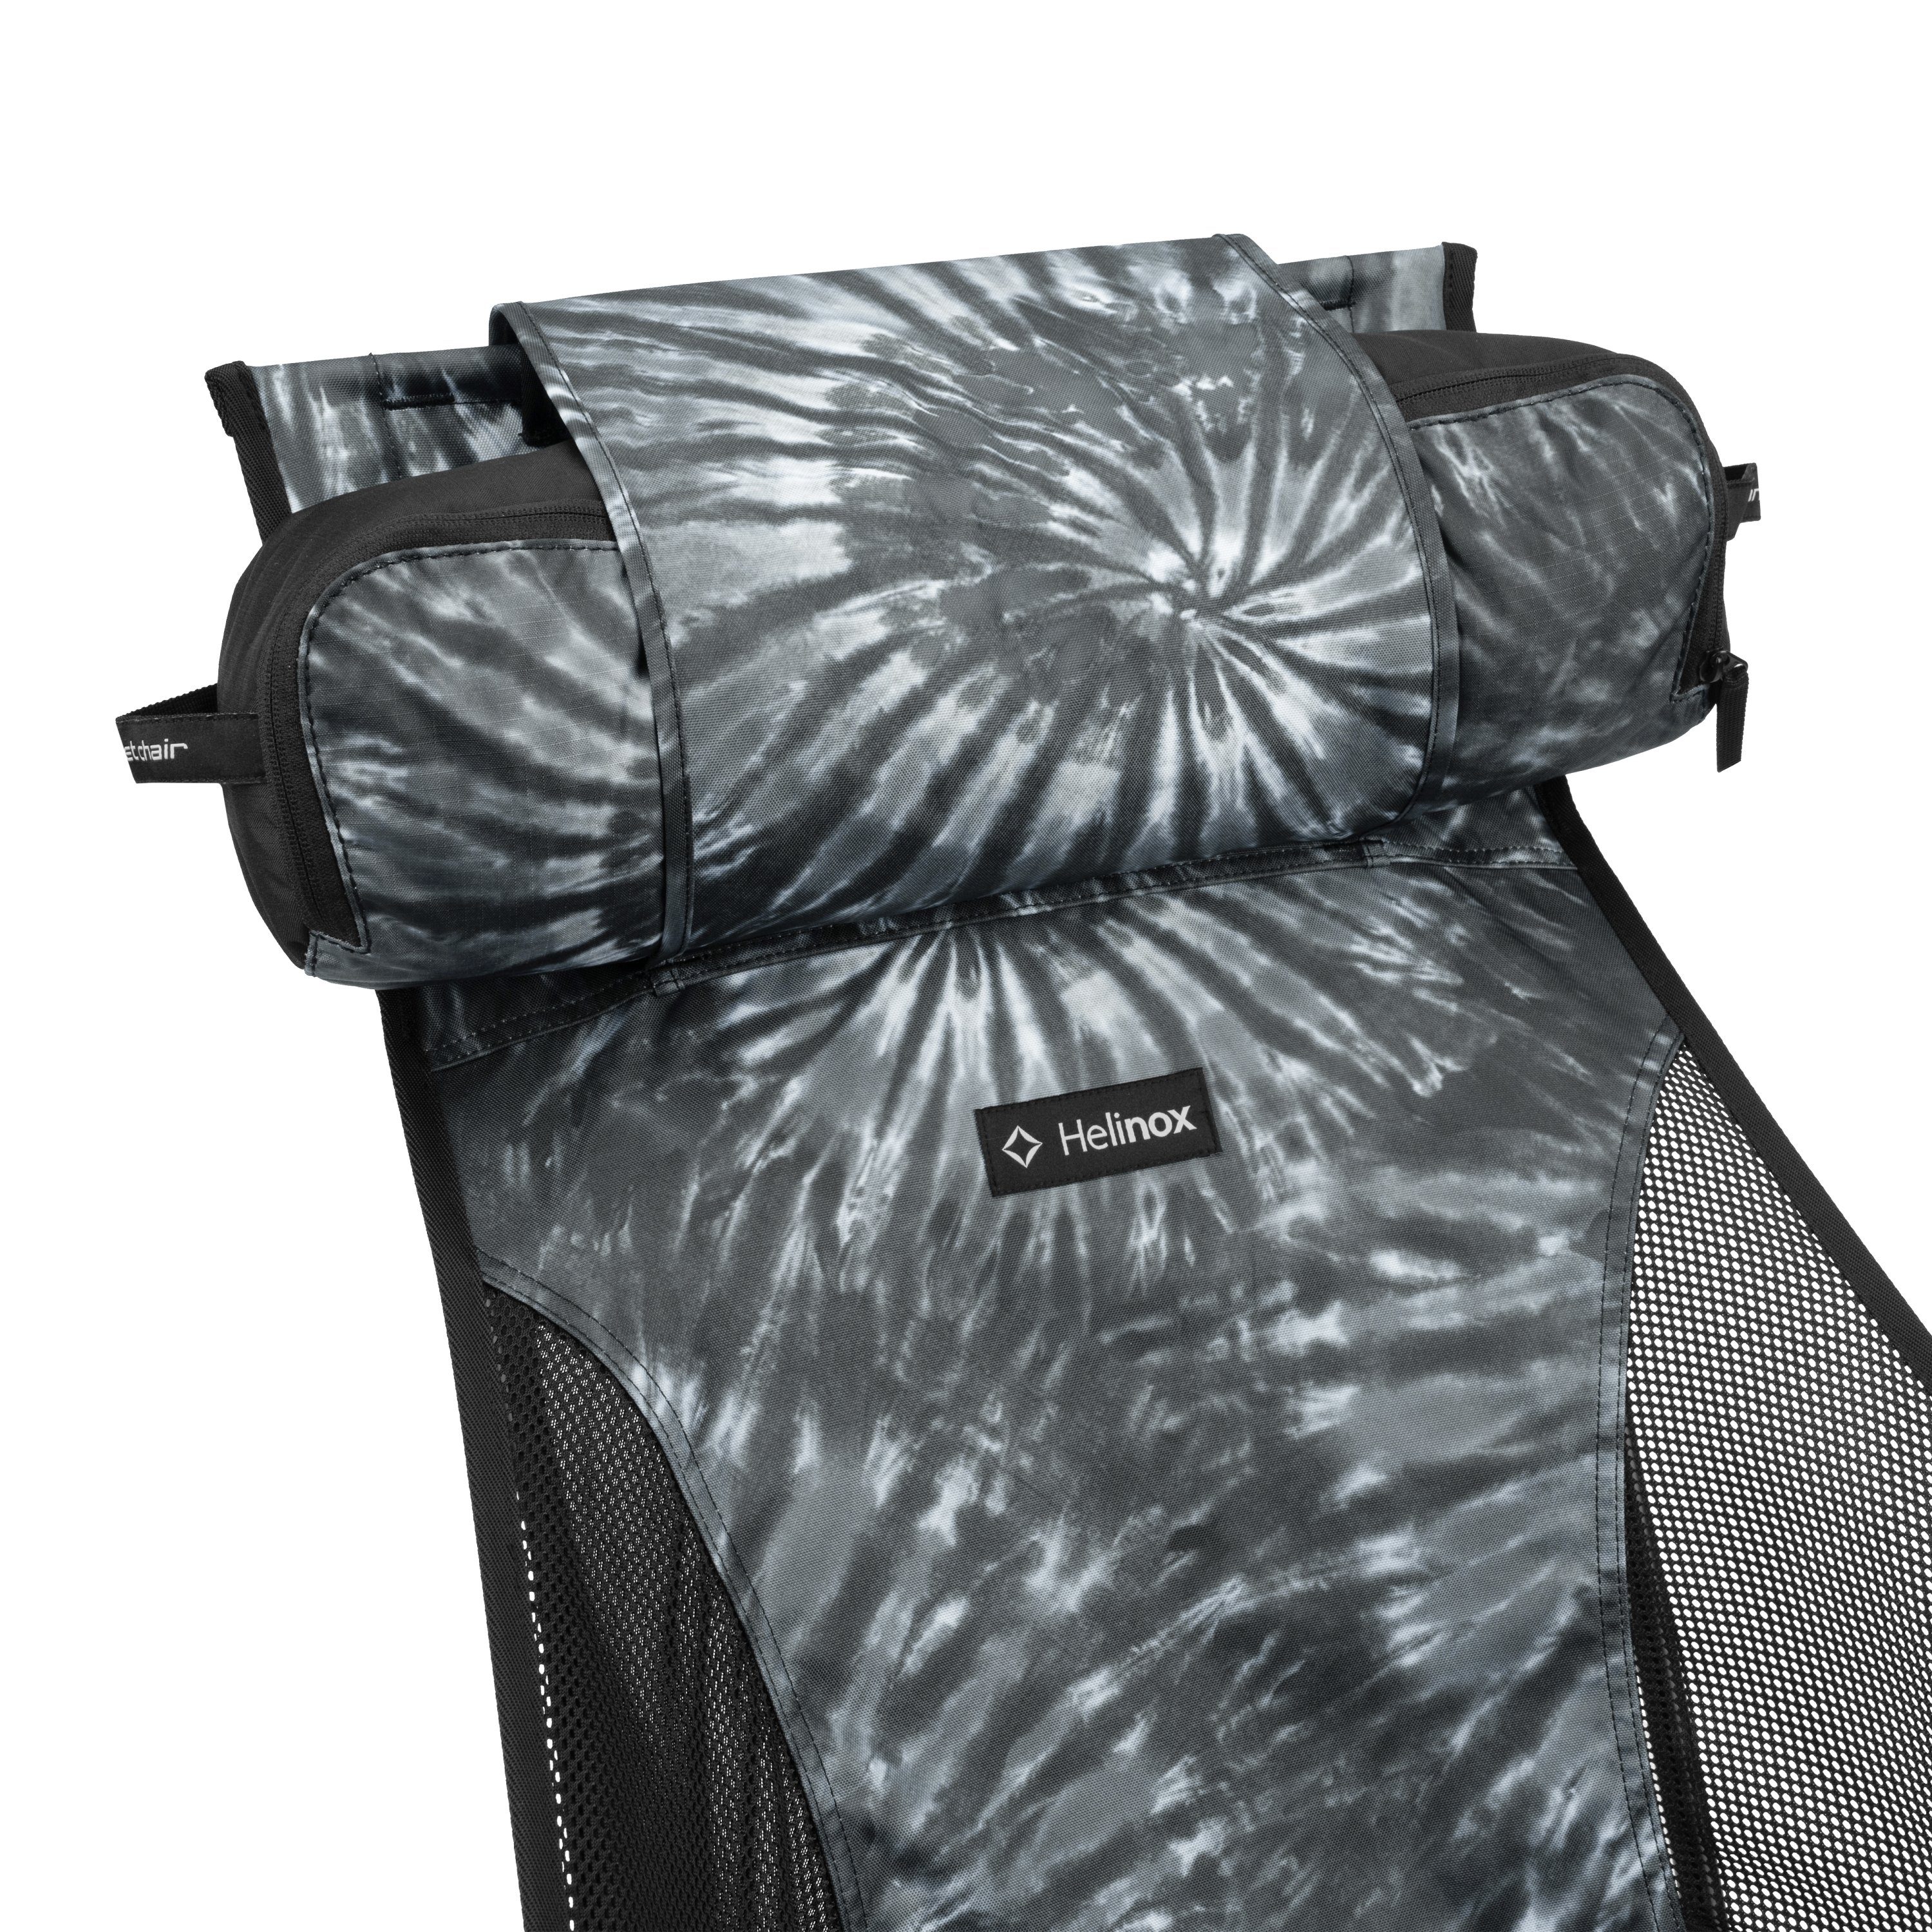 Sunset Tie (Gewicht 145kg) Campingstuhl Helinox Chair 1,475kg Helinox max. Black / Traglast Dye